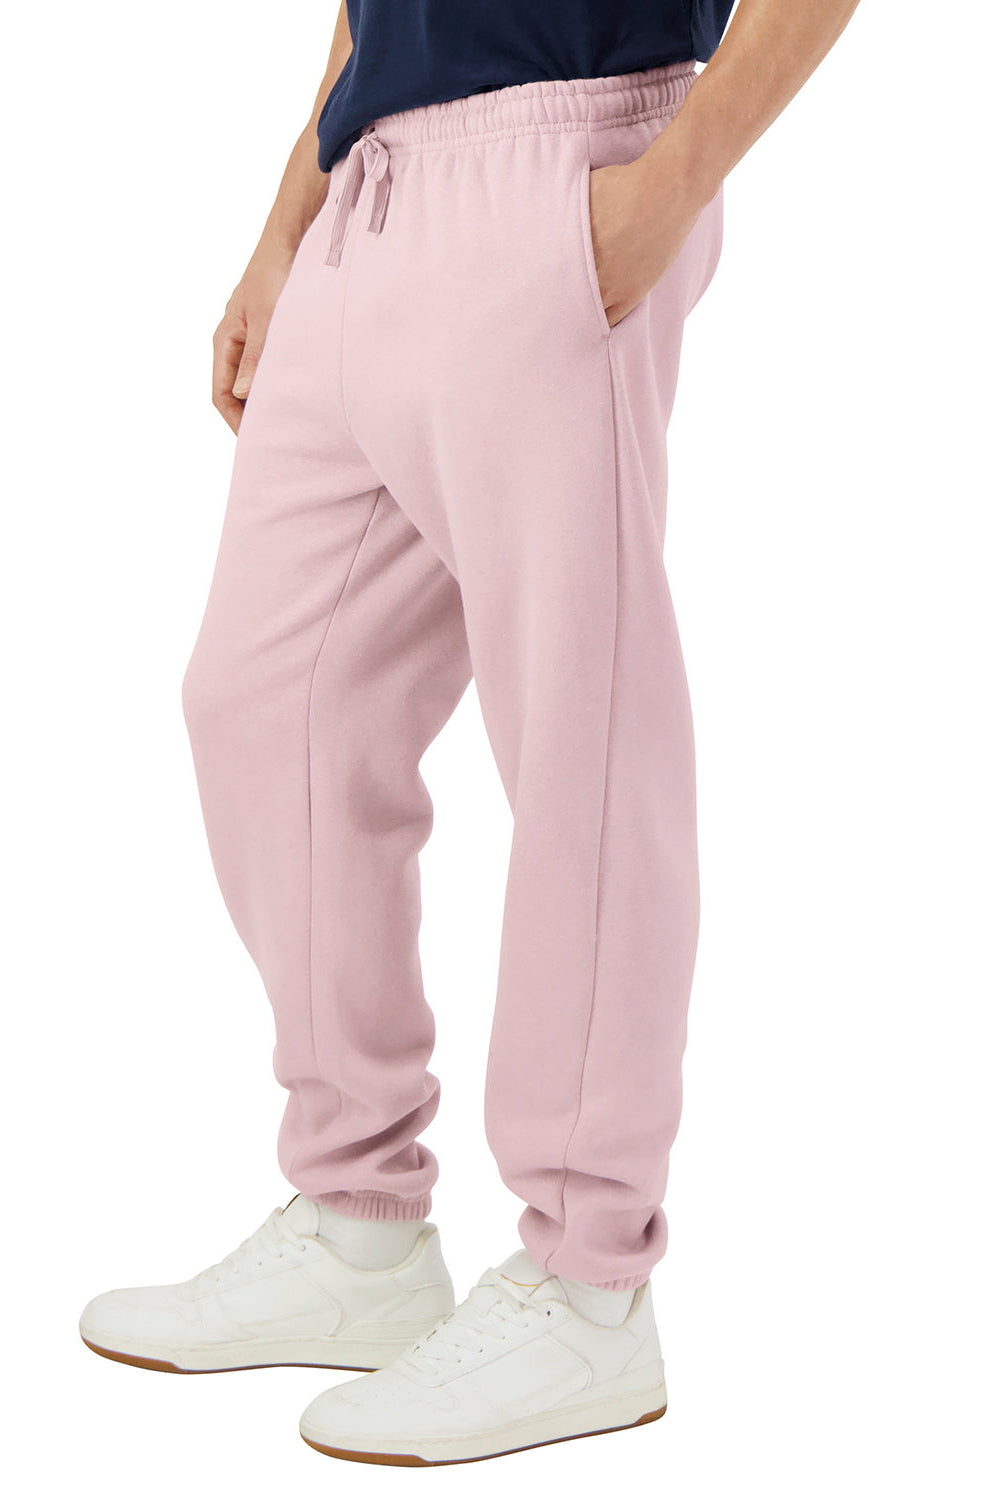 American Apparel RF491 Mens ReFlex Fleece Sweatpants w/ Pockets Blush Pink Model Side